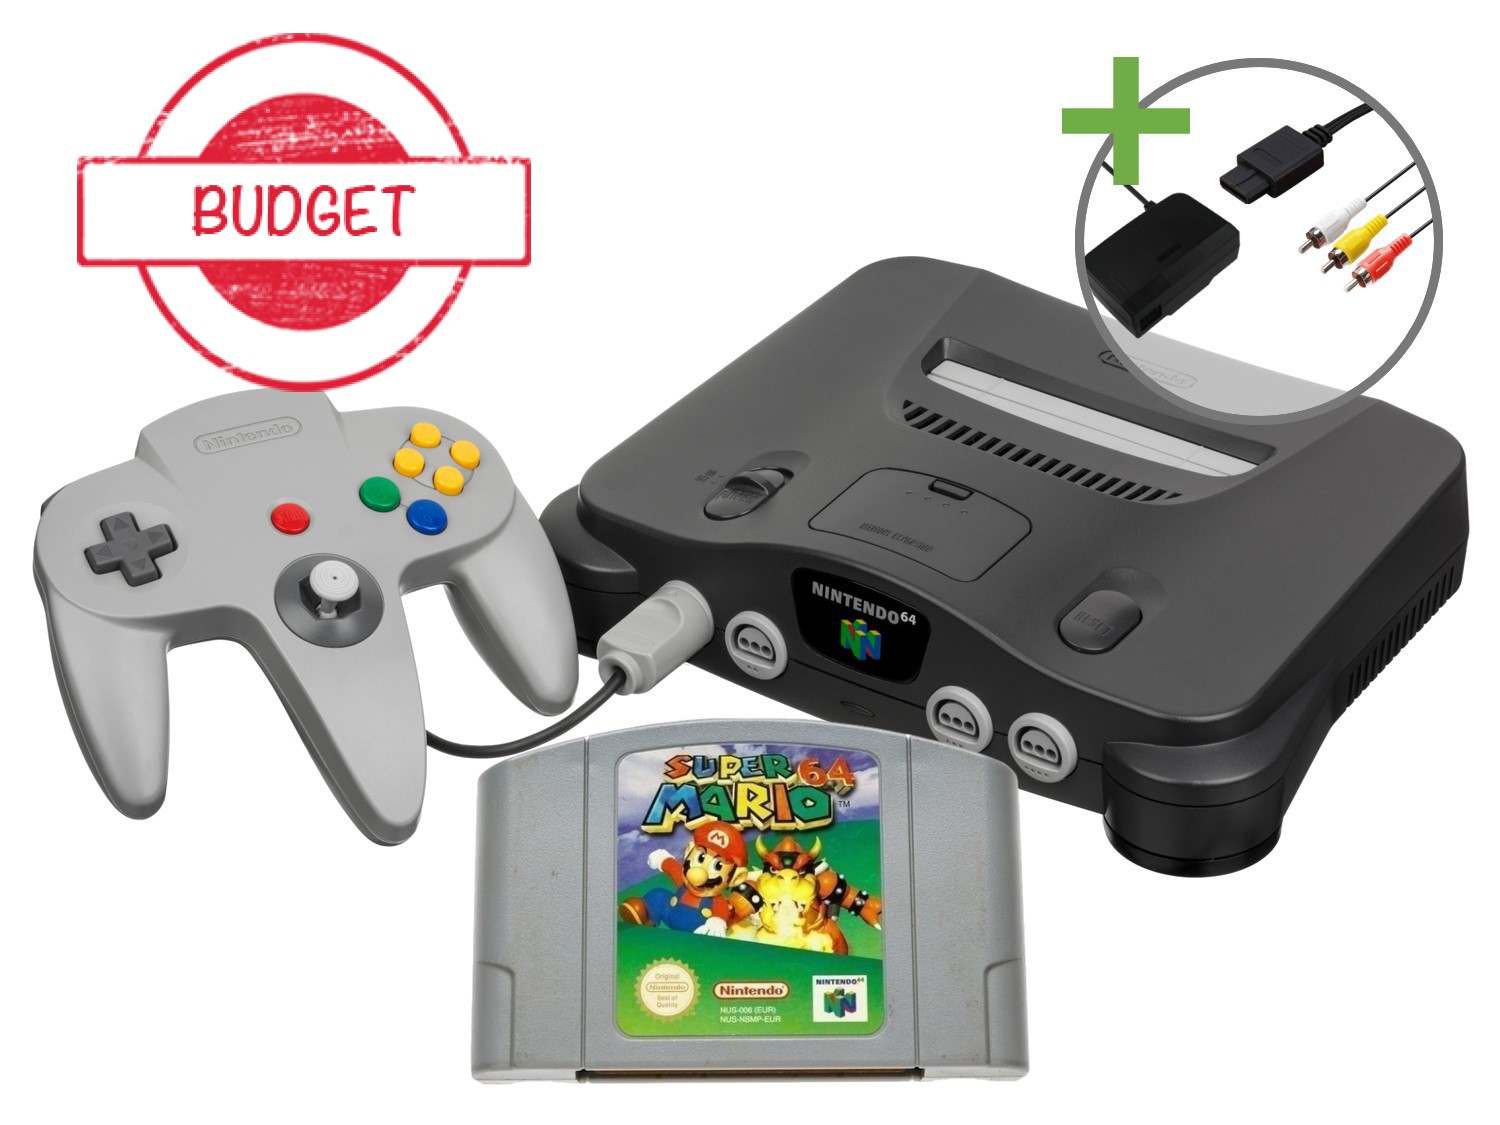 Nintendo 64 Starter Pack - Super Mario 64 Edition - Budget - Nintendo 64 Hardware